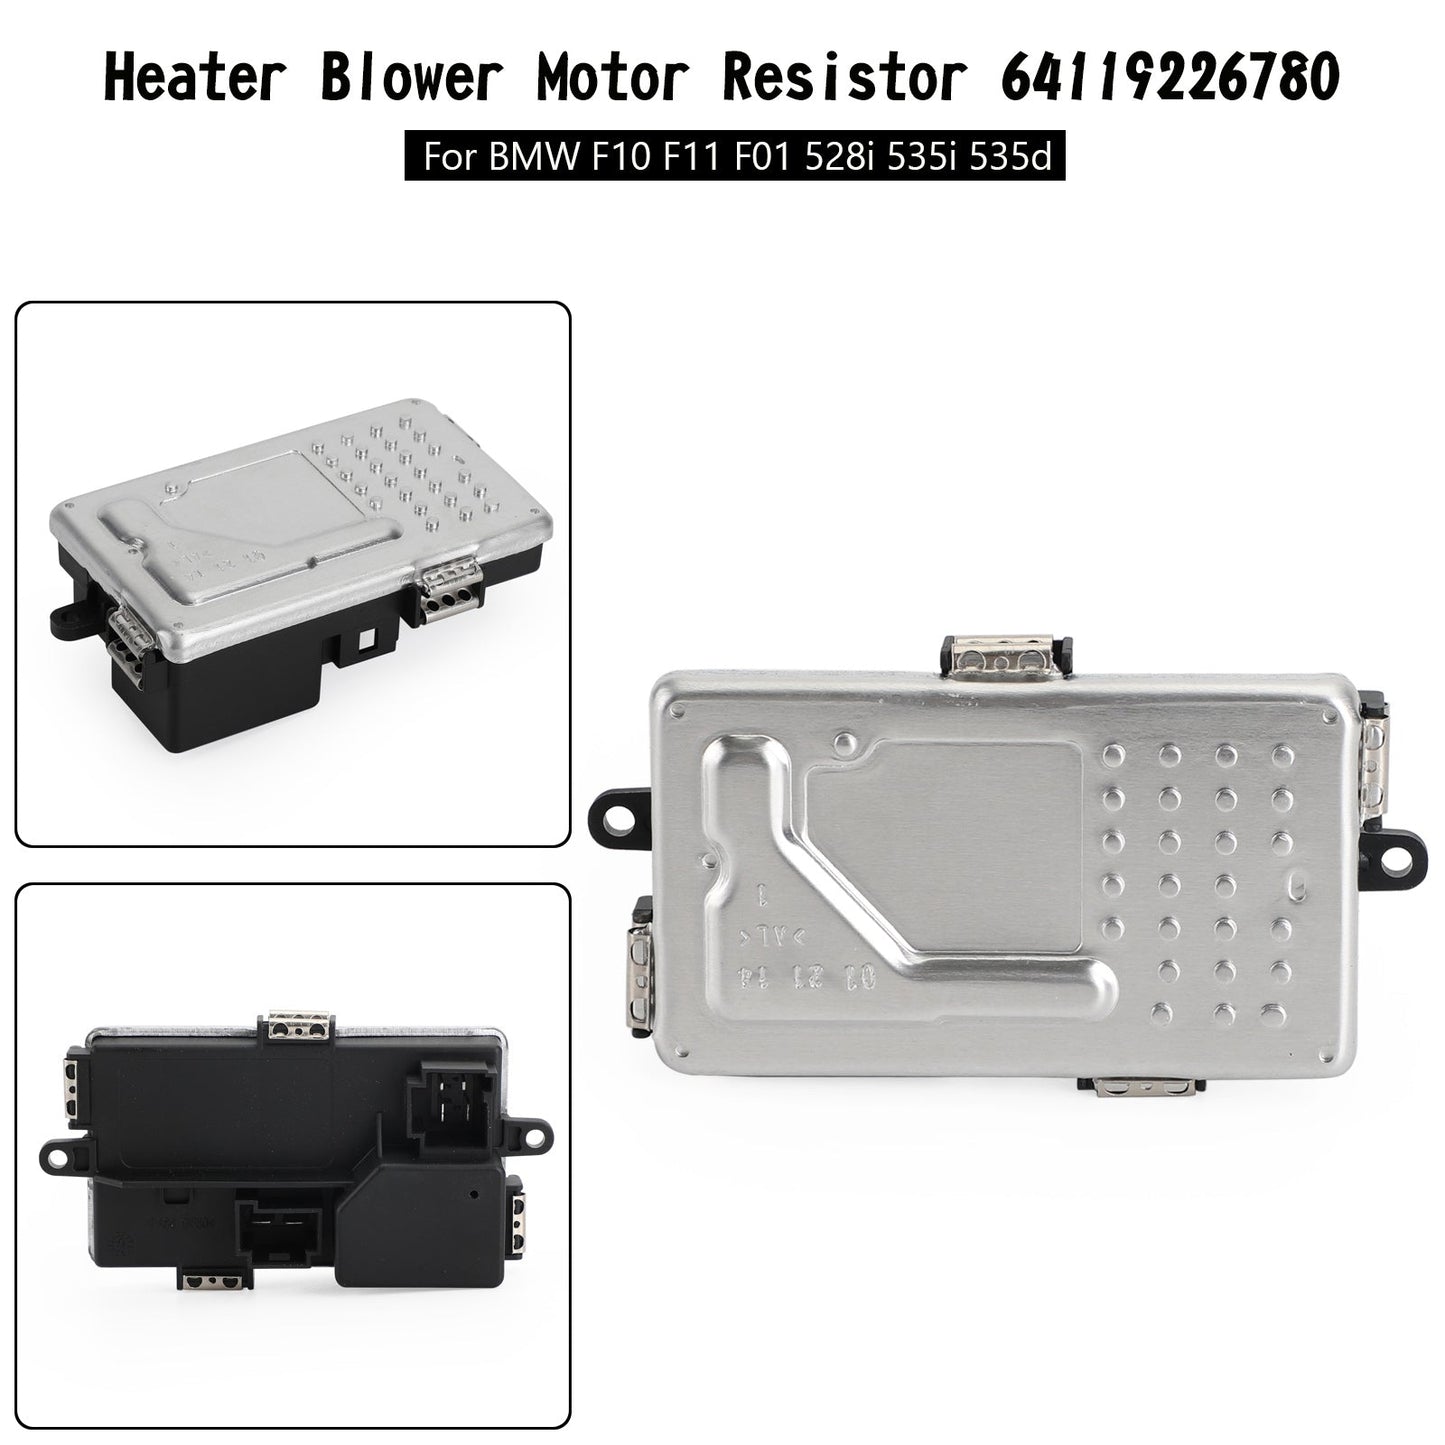 Heater Blower Motor Resistor 64119226780 For BMW F10 F11 F01 528i 535i 535d